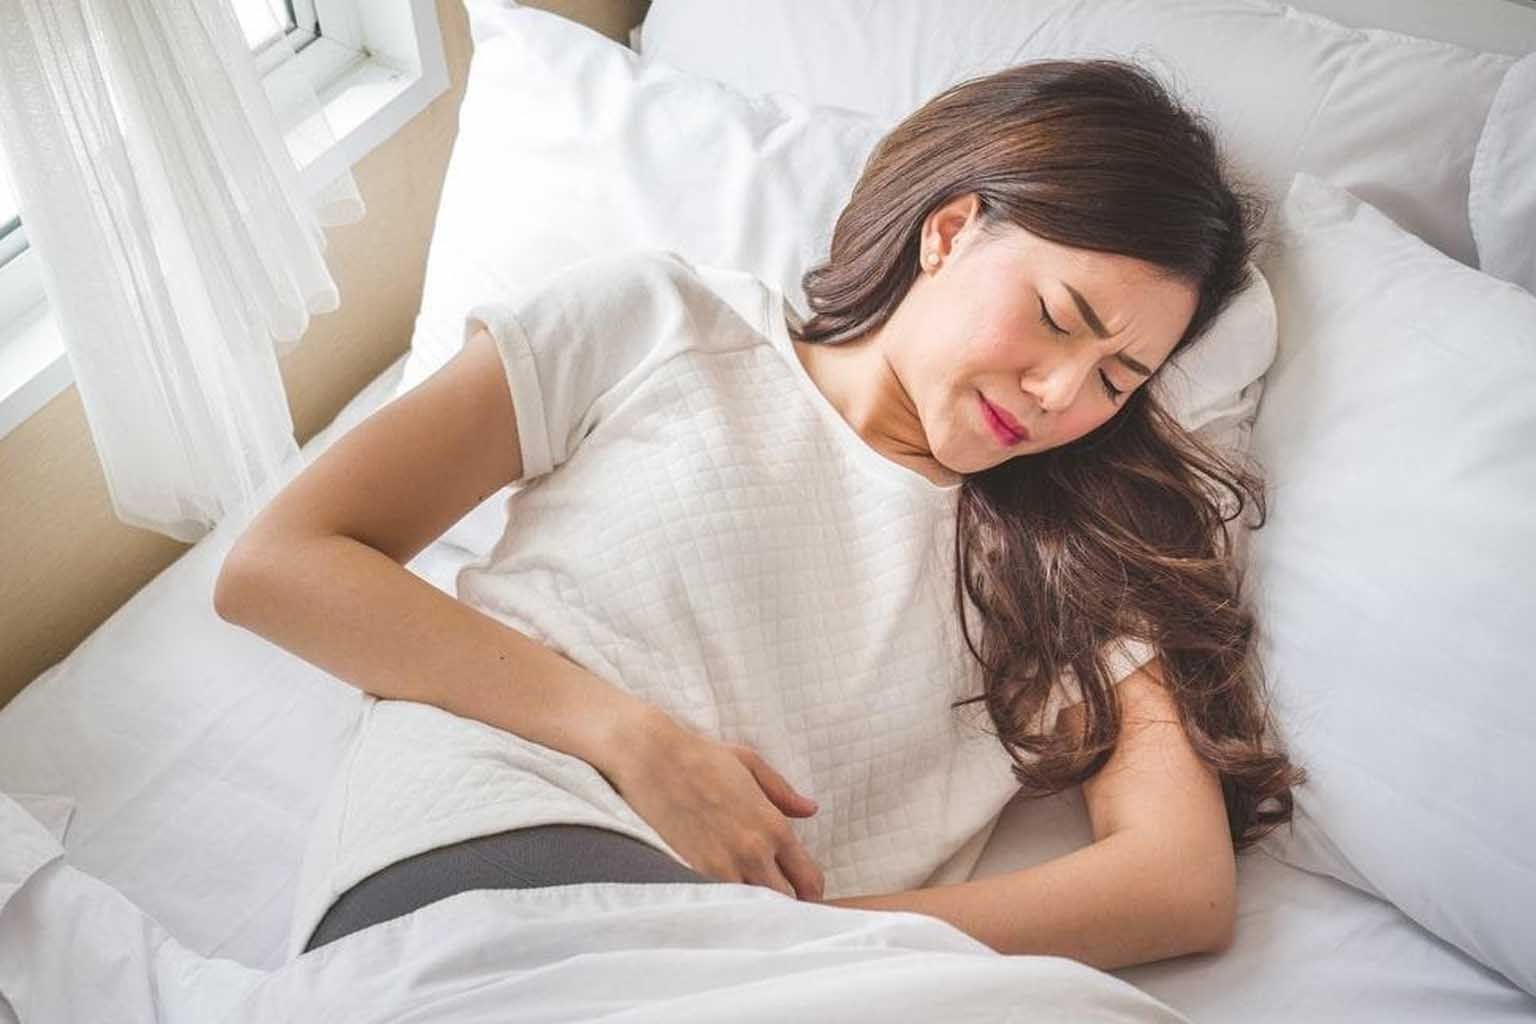 implantation cramp or menstrual cramp